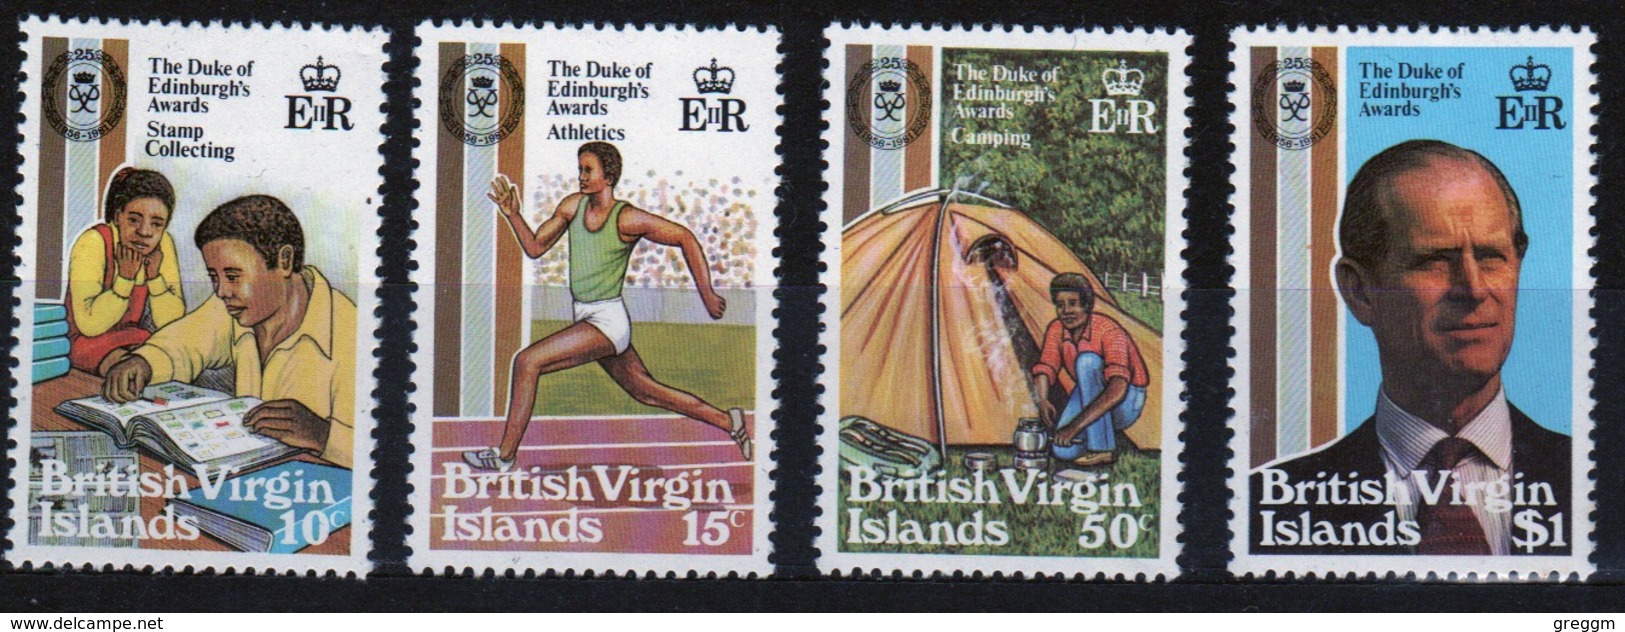 British Virgin Islands 1981 Queen Elizabeth Set Of Stamps Celebrating Duke Of Edinburgh Award Scheme. - British Virgin Islands